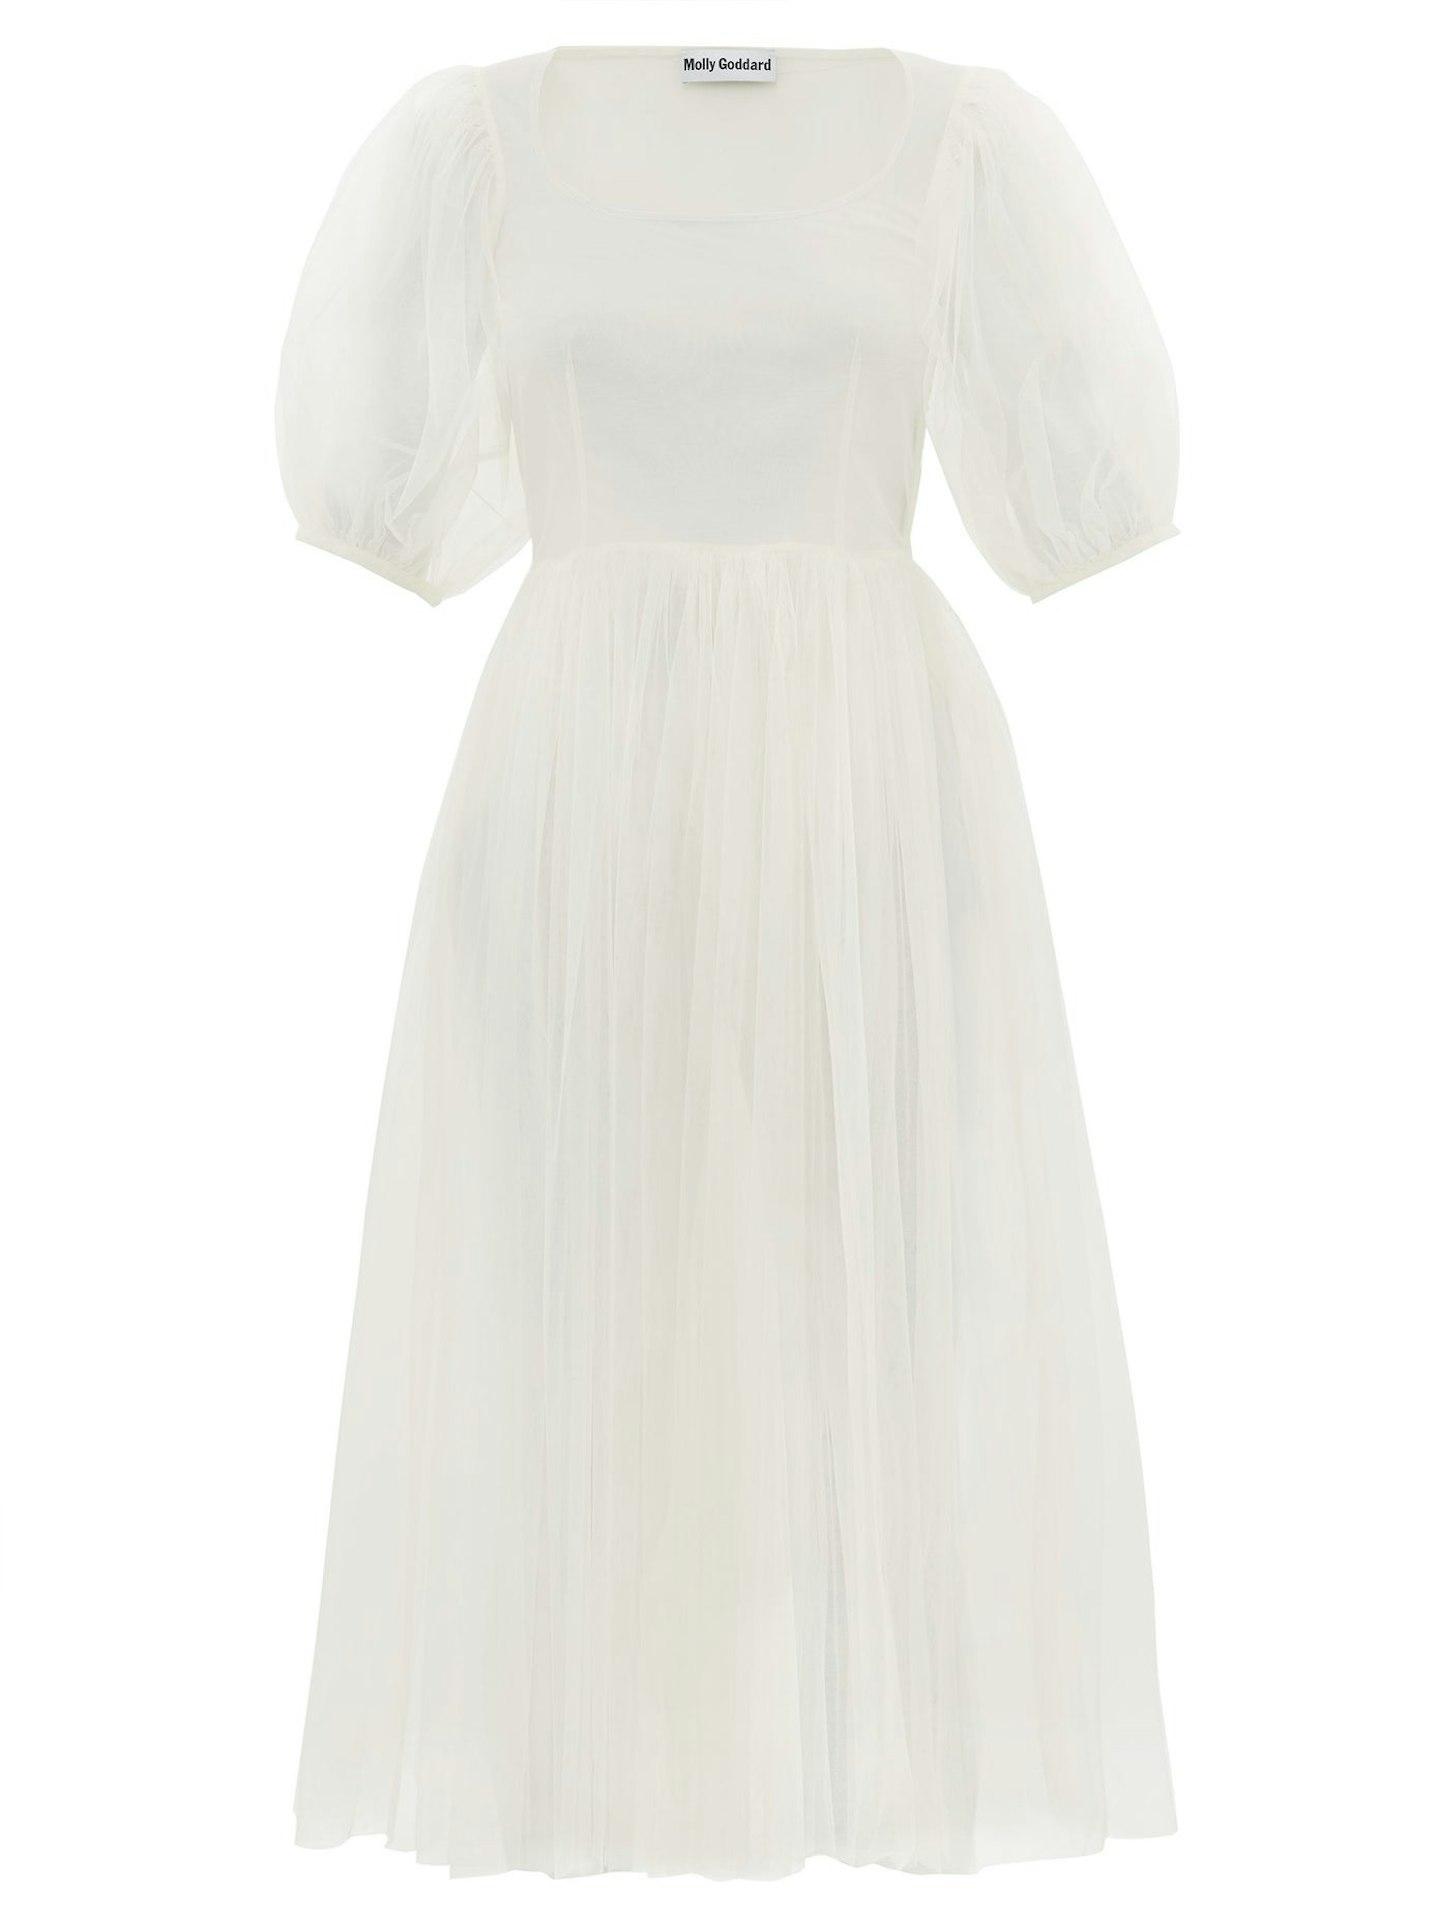 Molly Goddard, Puff Sleeve Tulle Midi Dress, £900